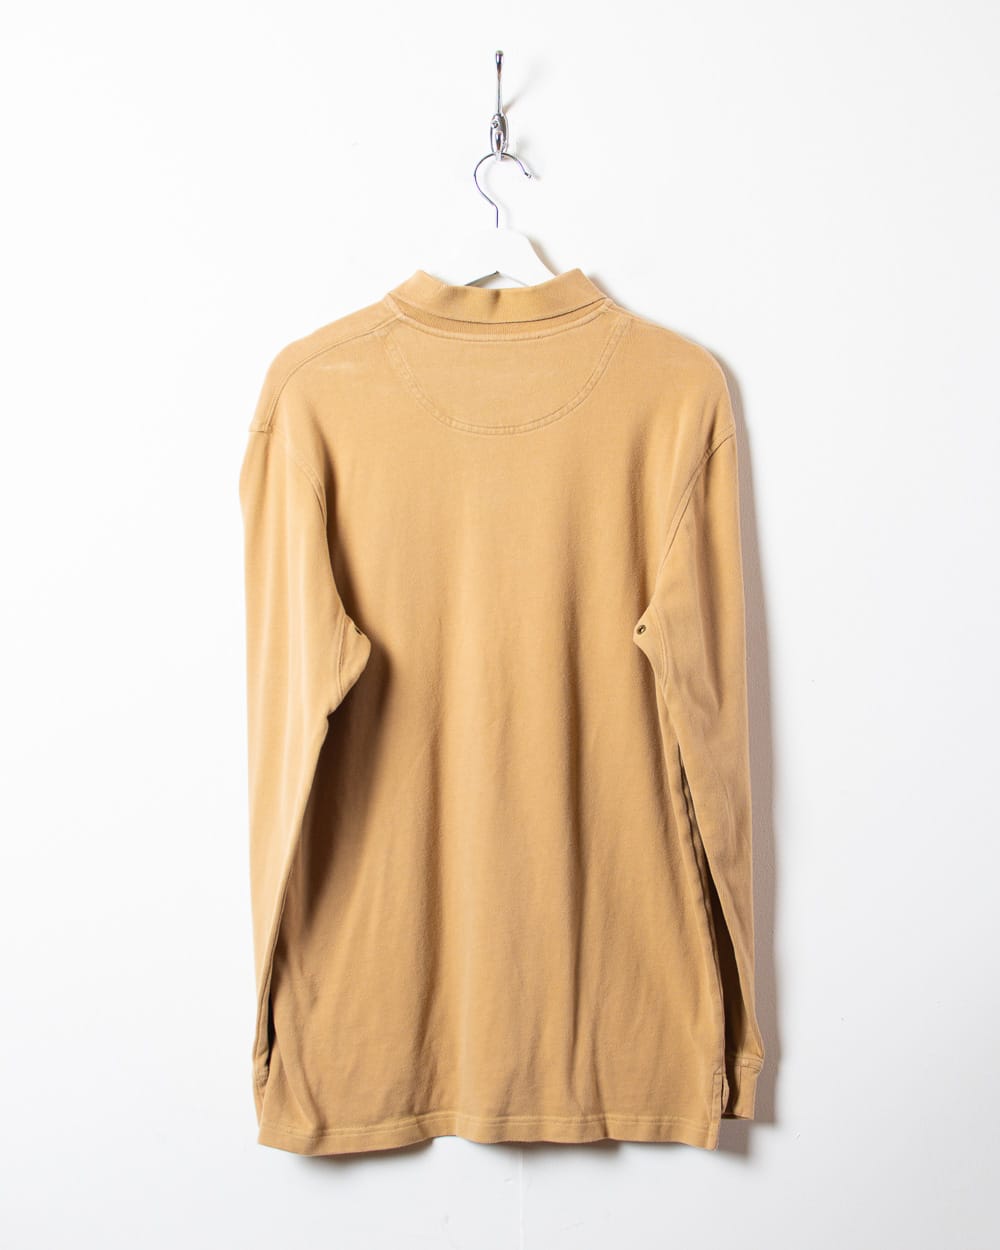 Neutral Timberland Long Sleeved Polo Shirt - Medium